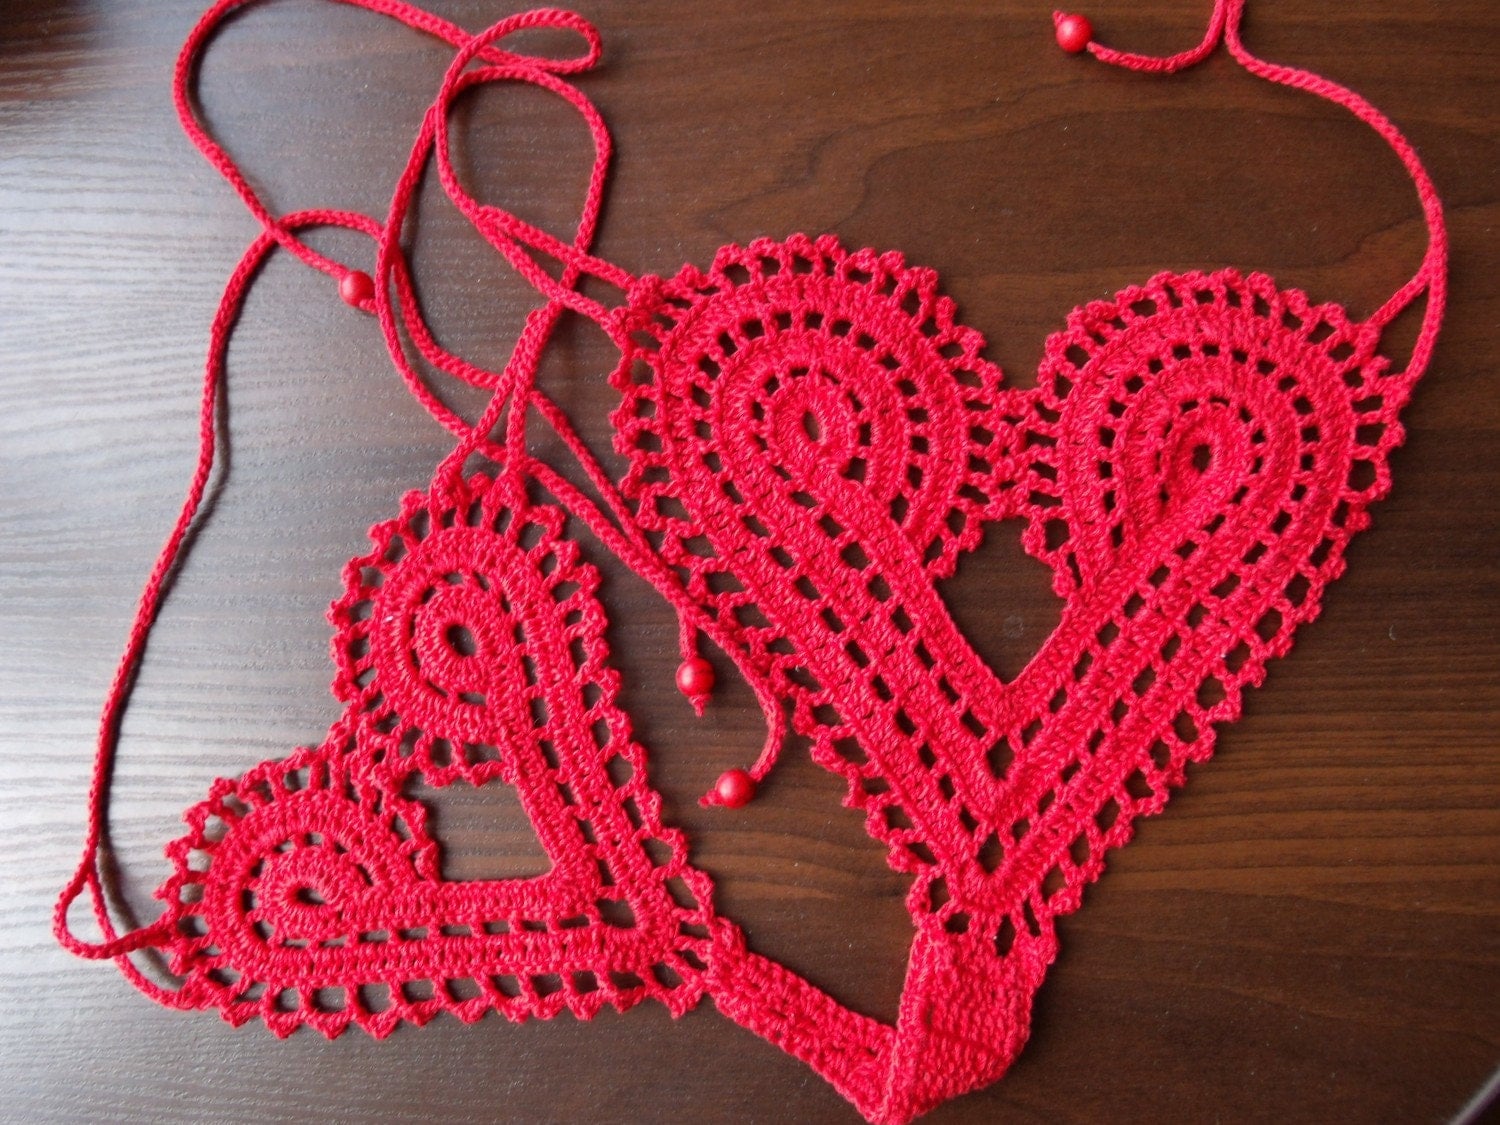 Hand crochet heart string thong panties by SintijasCrafts on Etsy